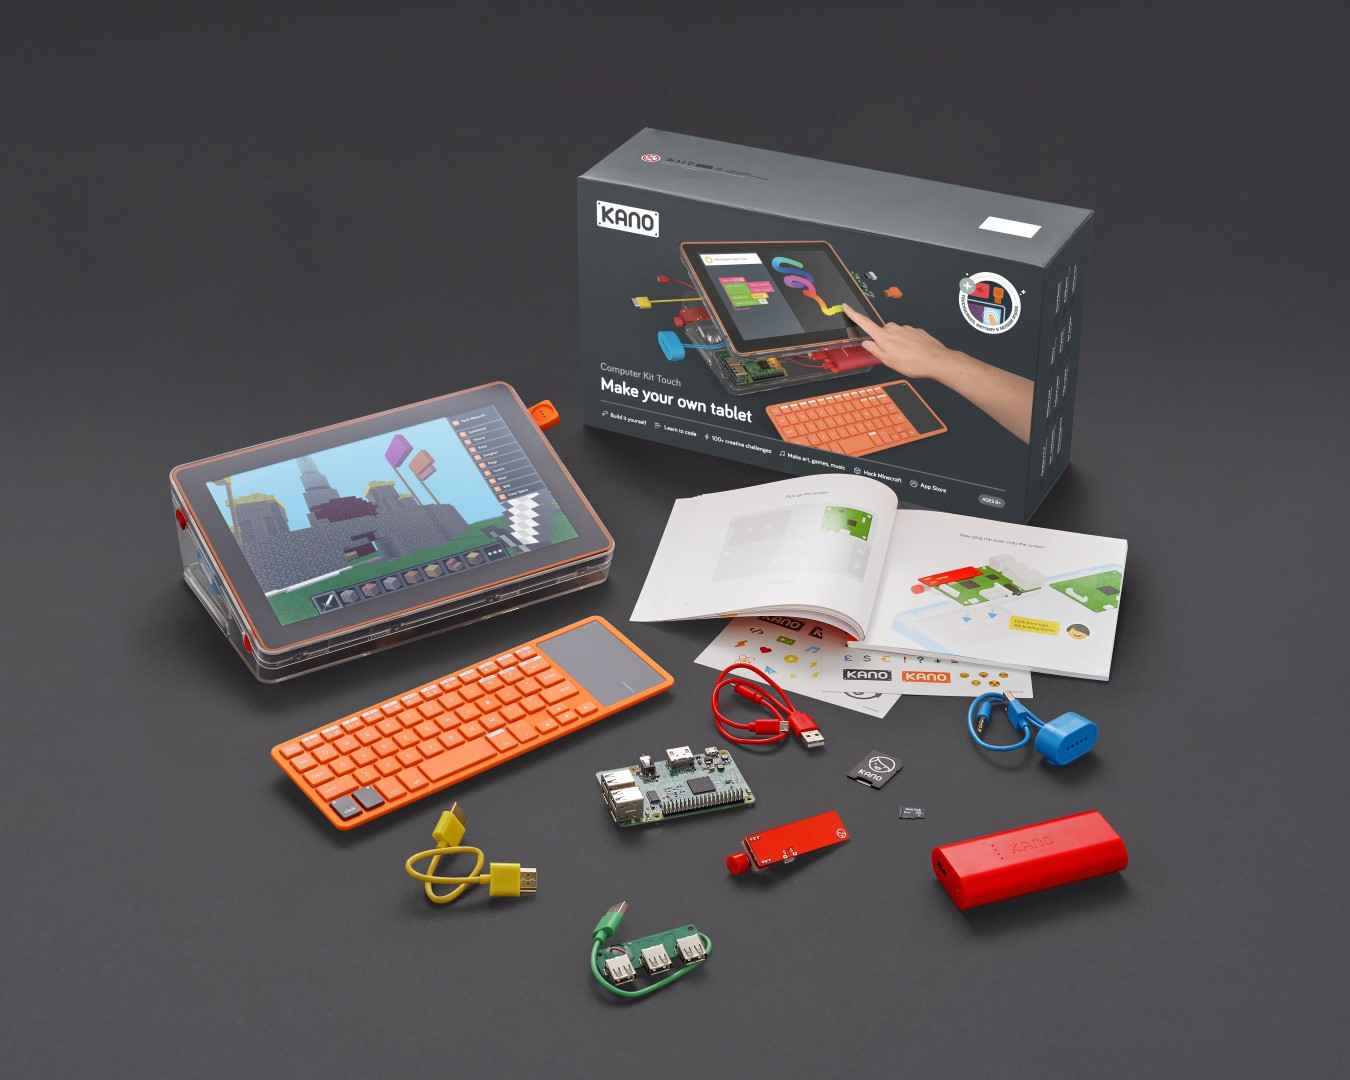 Kano DIY Computer Kit
 Kano adds a touchscreen to its DIY puter kit shipping